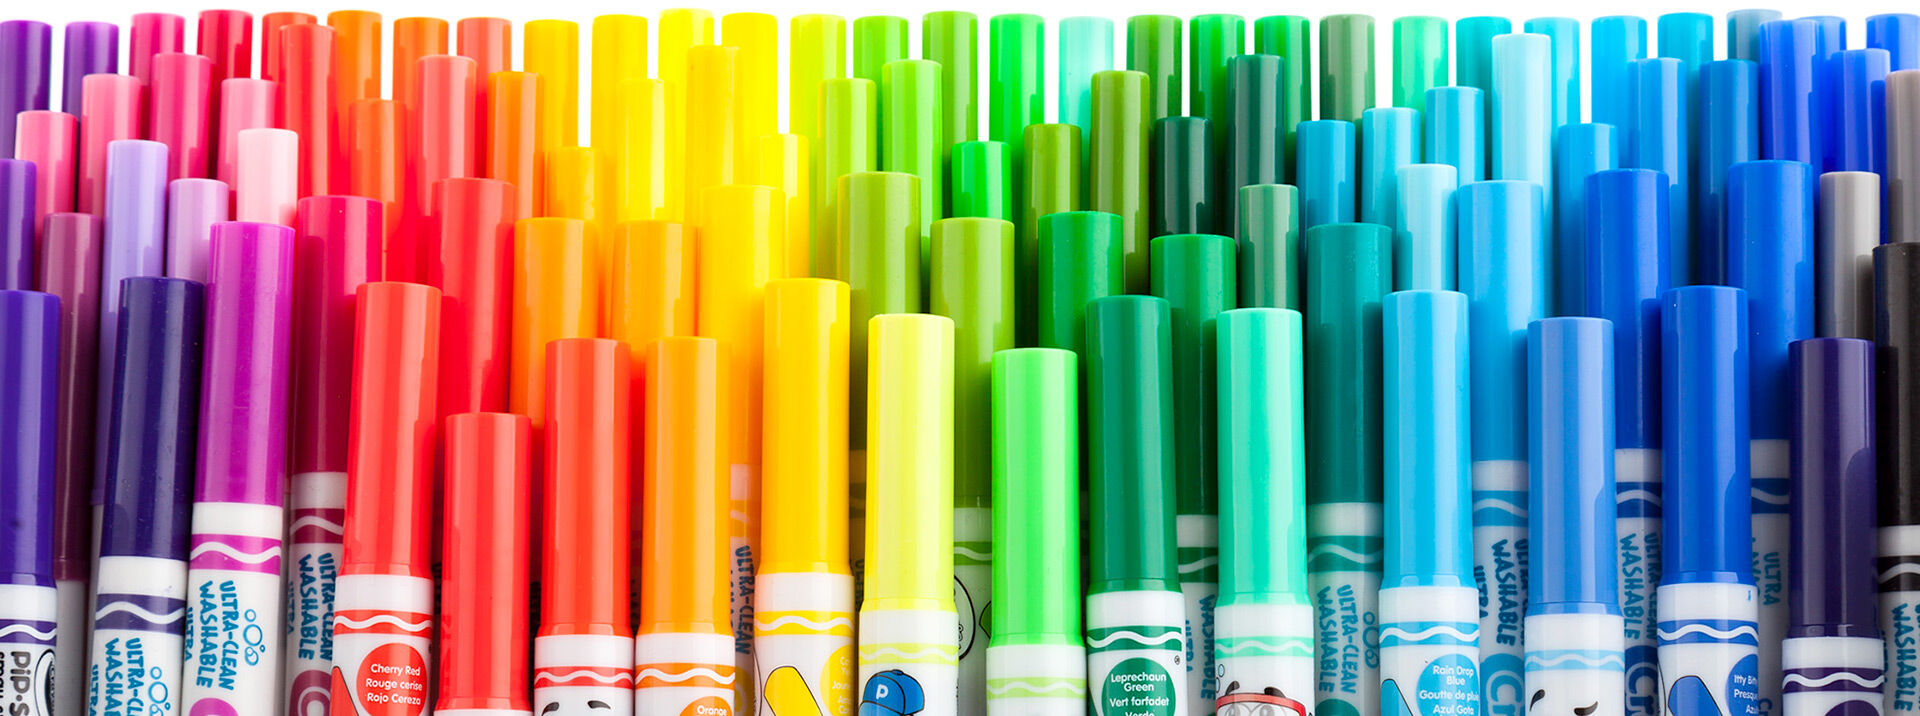 Crayola Markers - Colored Art Markers | Crayola